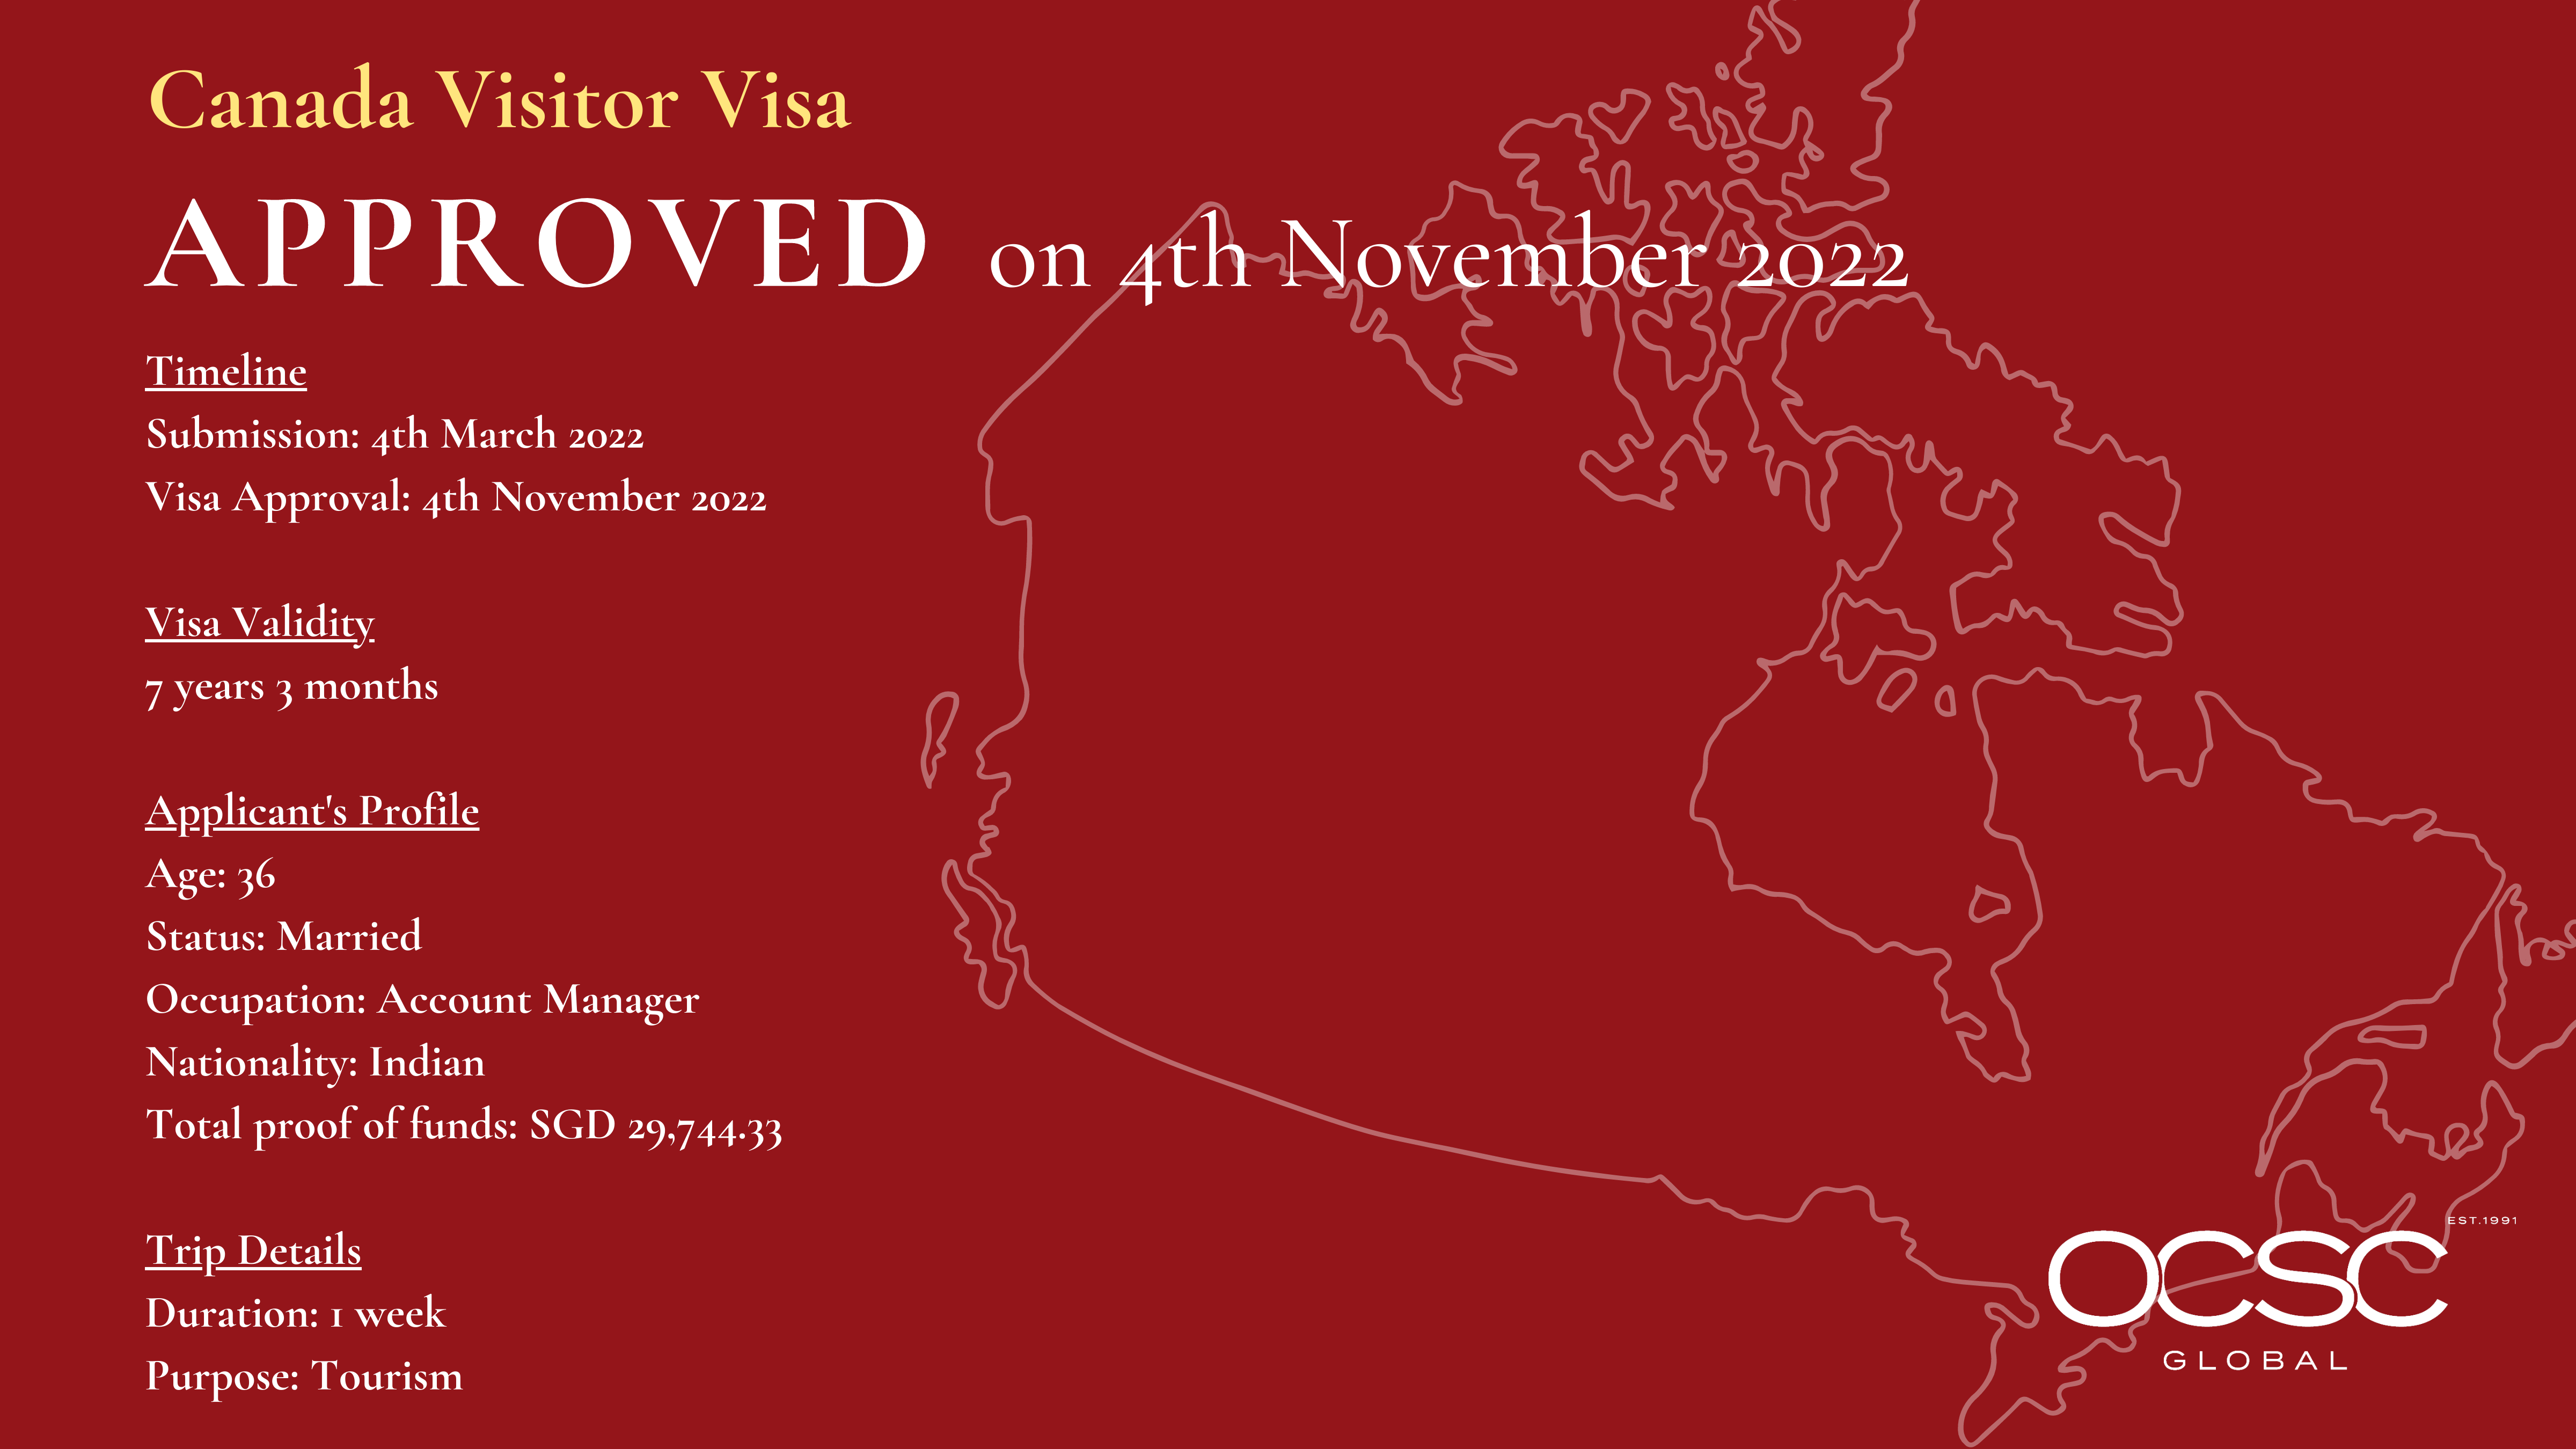 Approval for Canada Visitor Visa OCSC Global